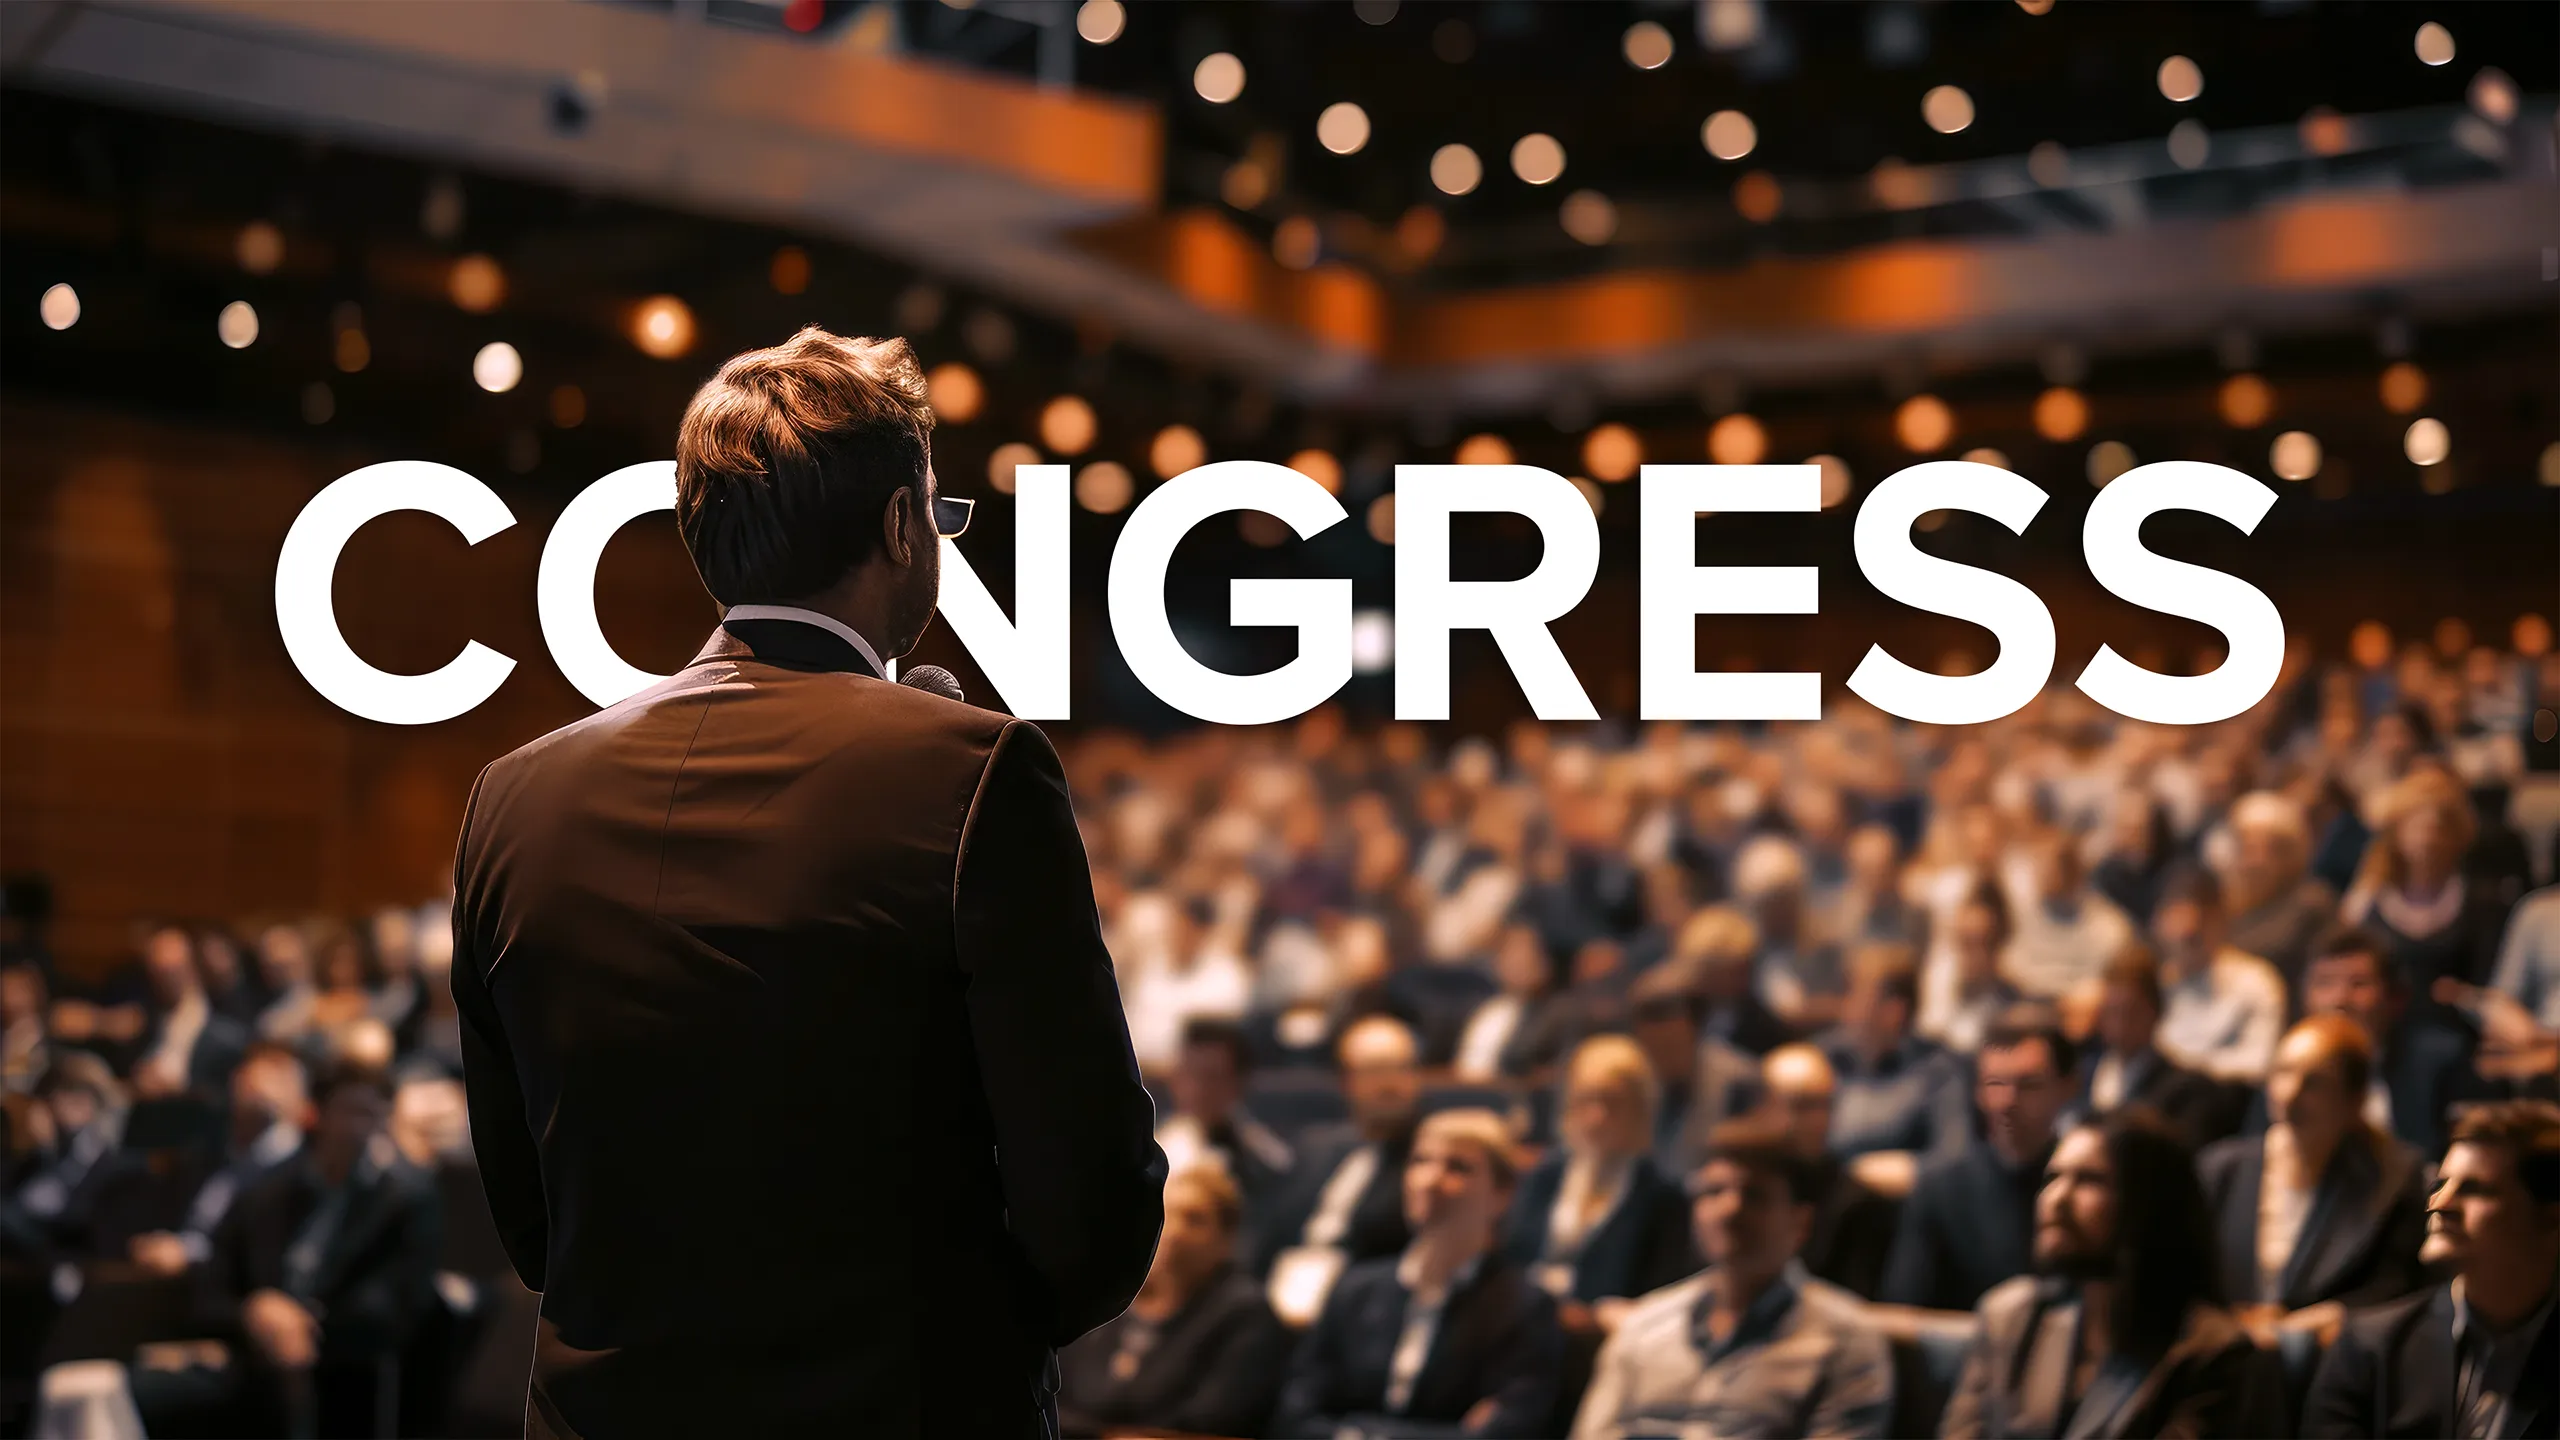 congresses-conferences_1